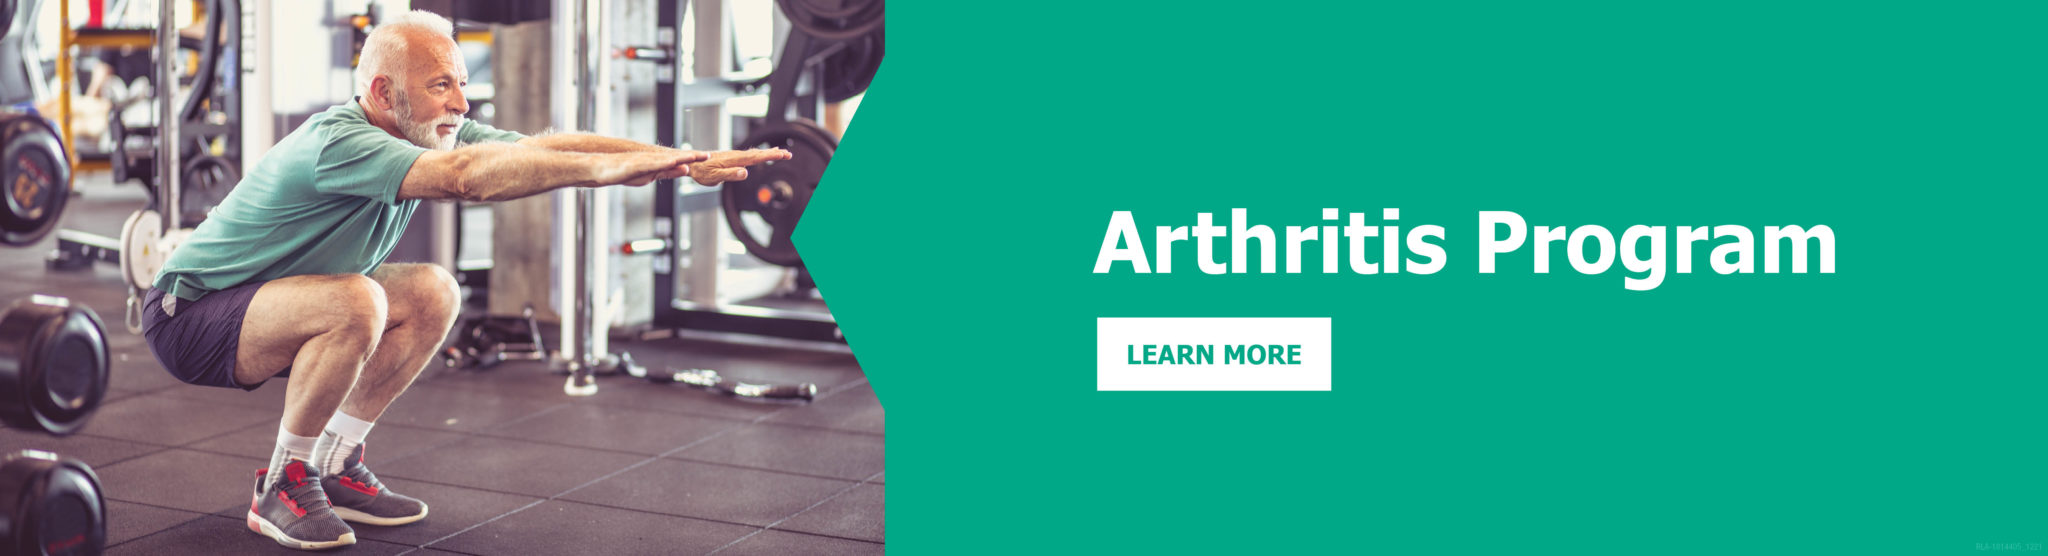 Arthritis Program